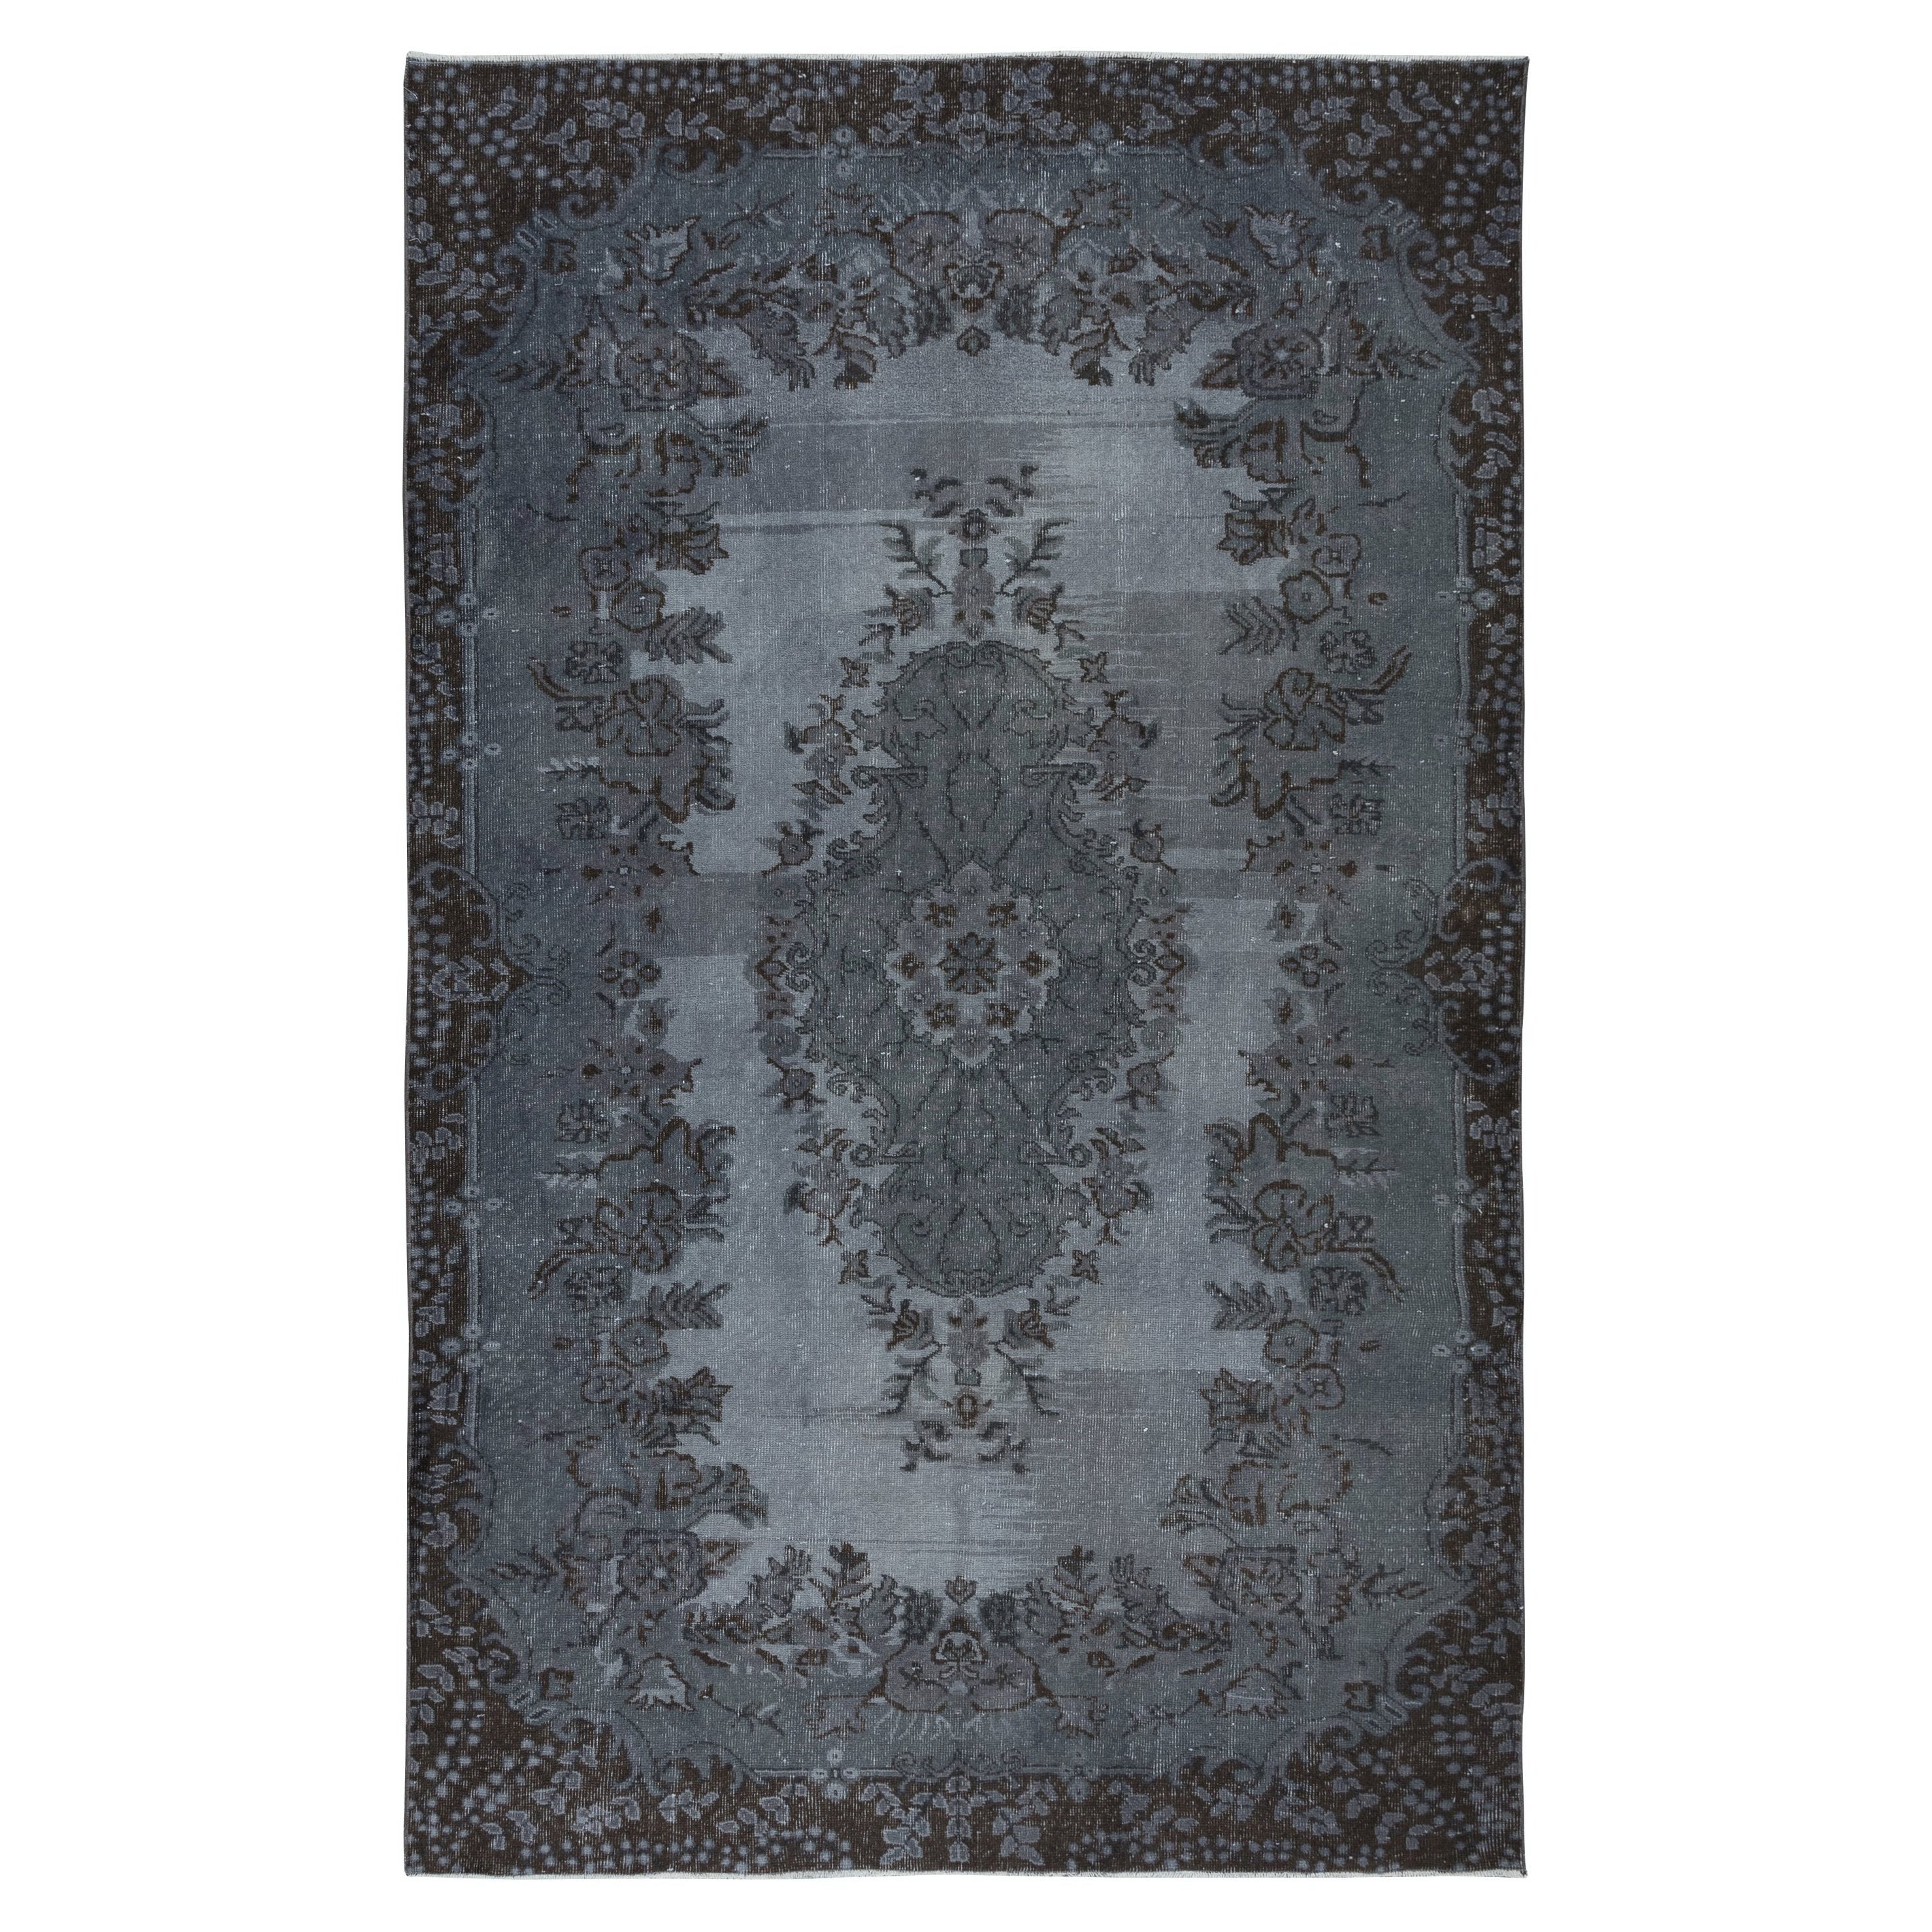 6.3x10 Ft Handmade Gray Area Rug with Medallion Design. Modern Turkish Carpet For Sale